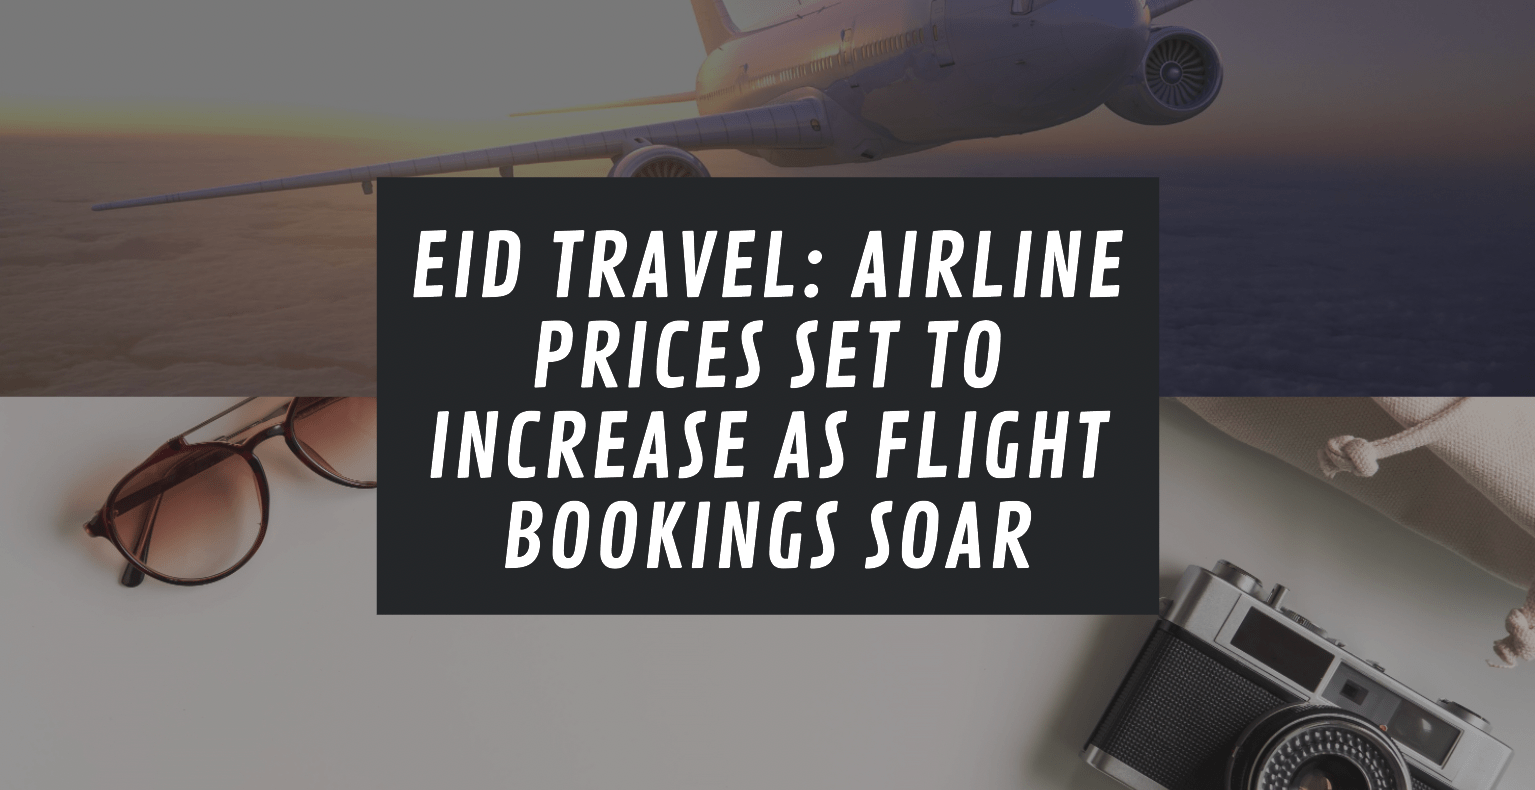 Eid Travel Alert